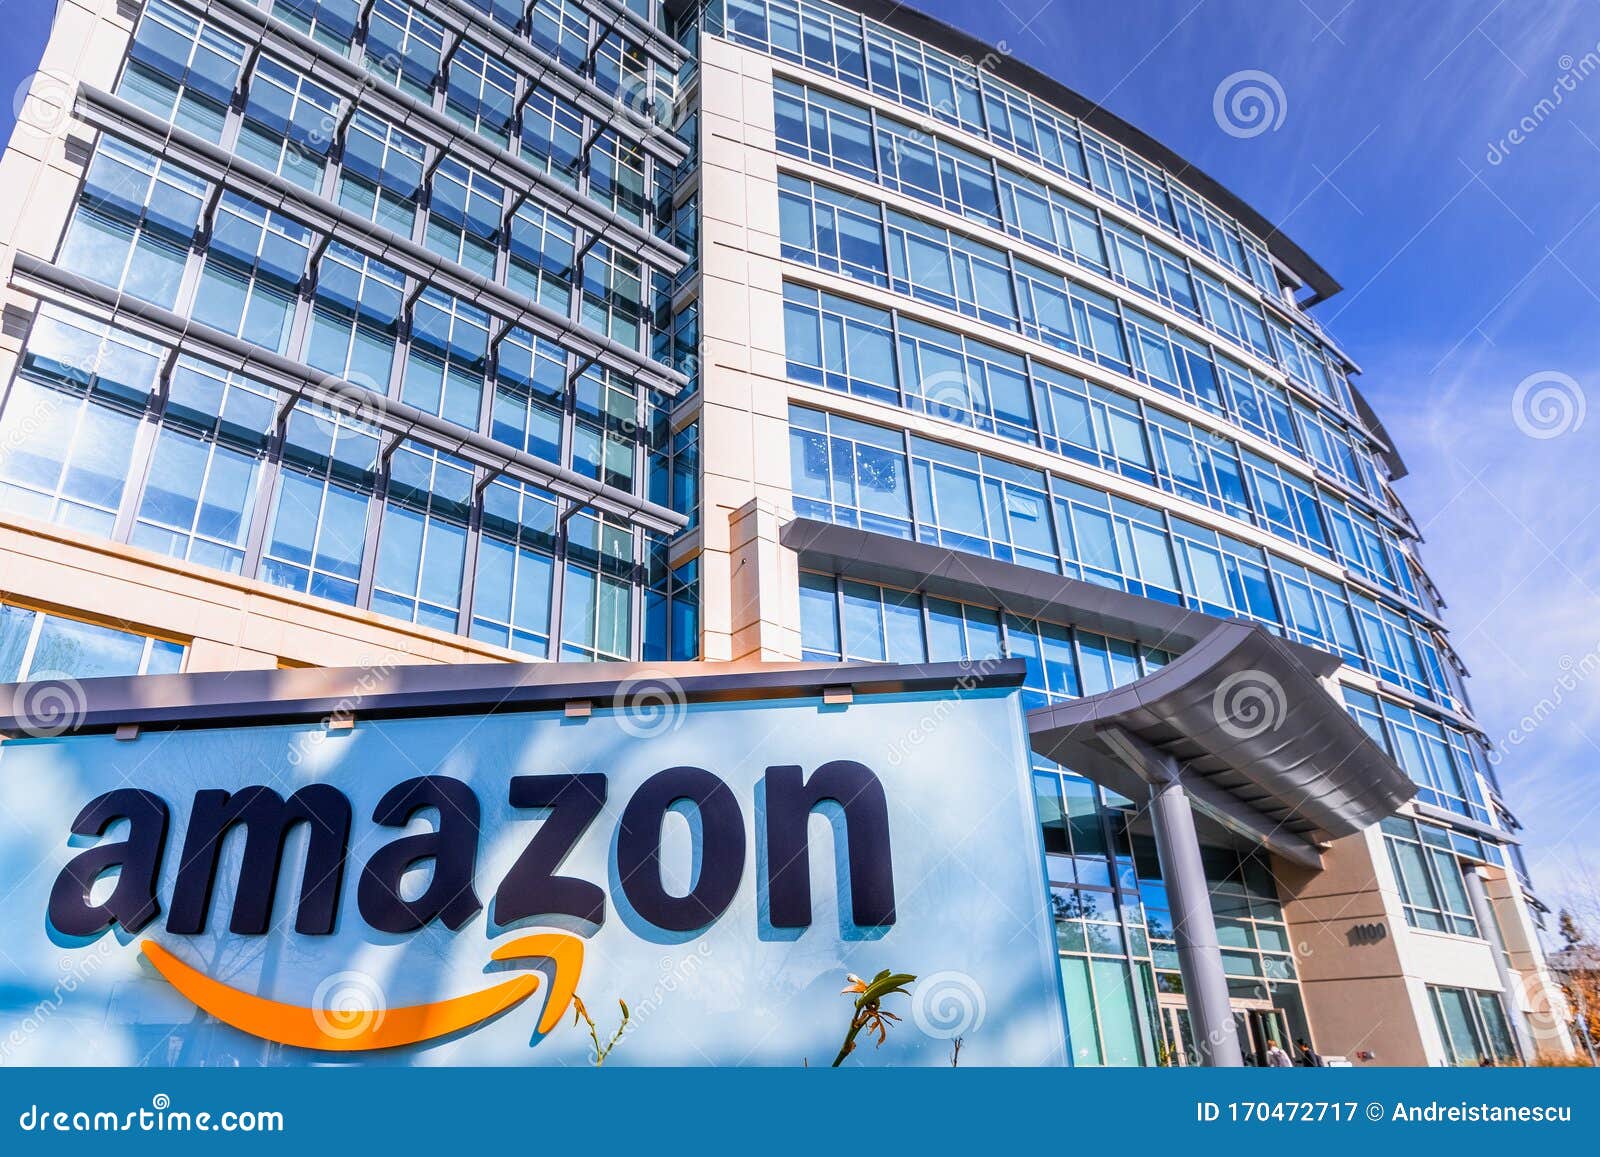 Jan 24, 2020 Sunnyvale / CA / USA - Amazon Headquarters Located in ...